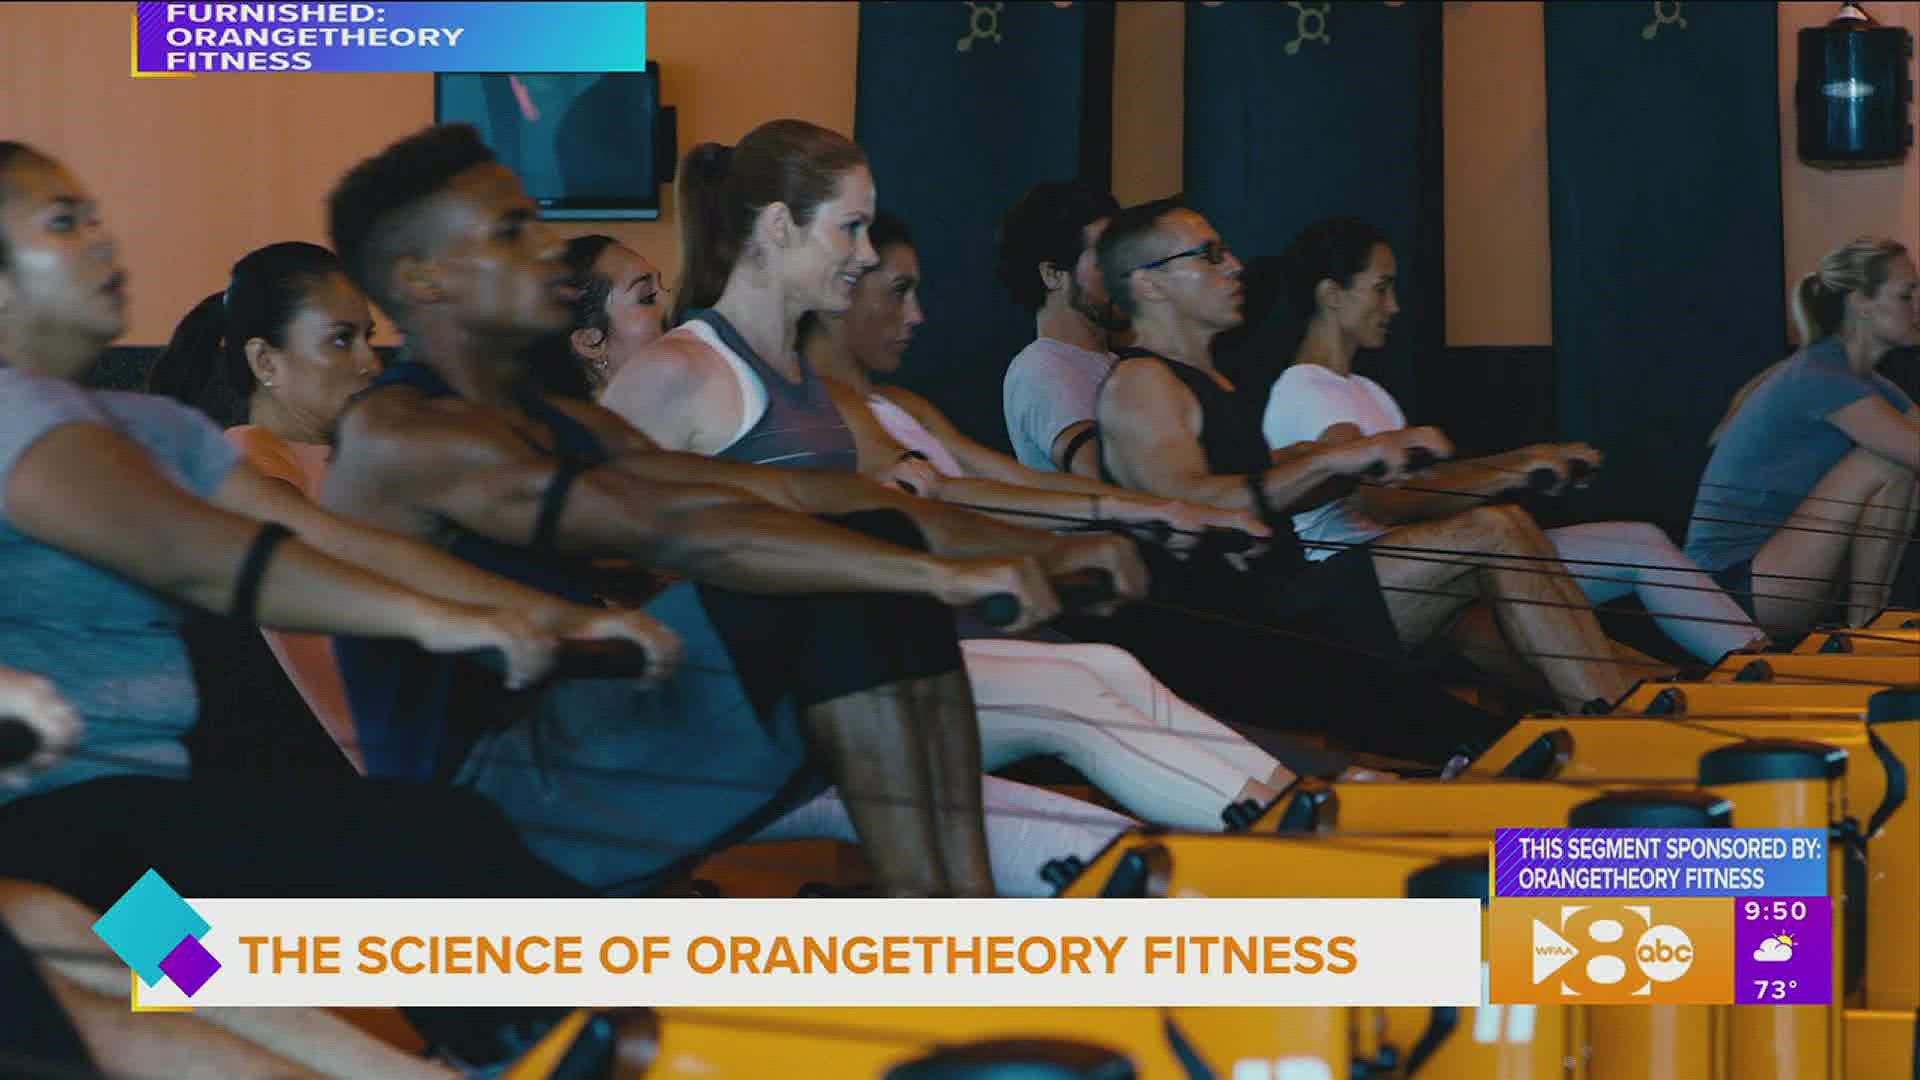 This segment is sponsored by: Orangetheory Fitness